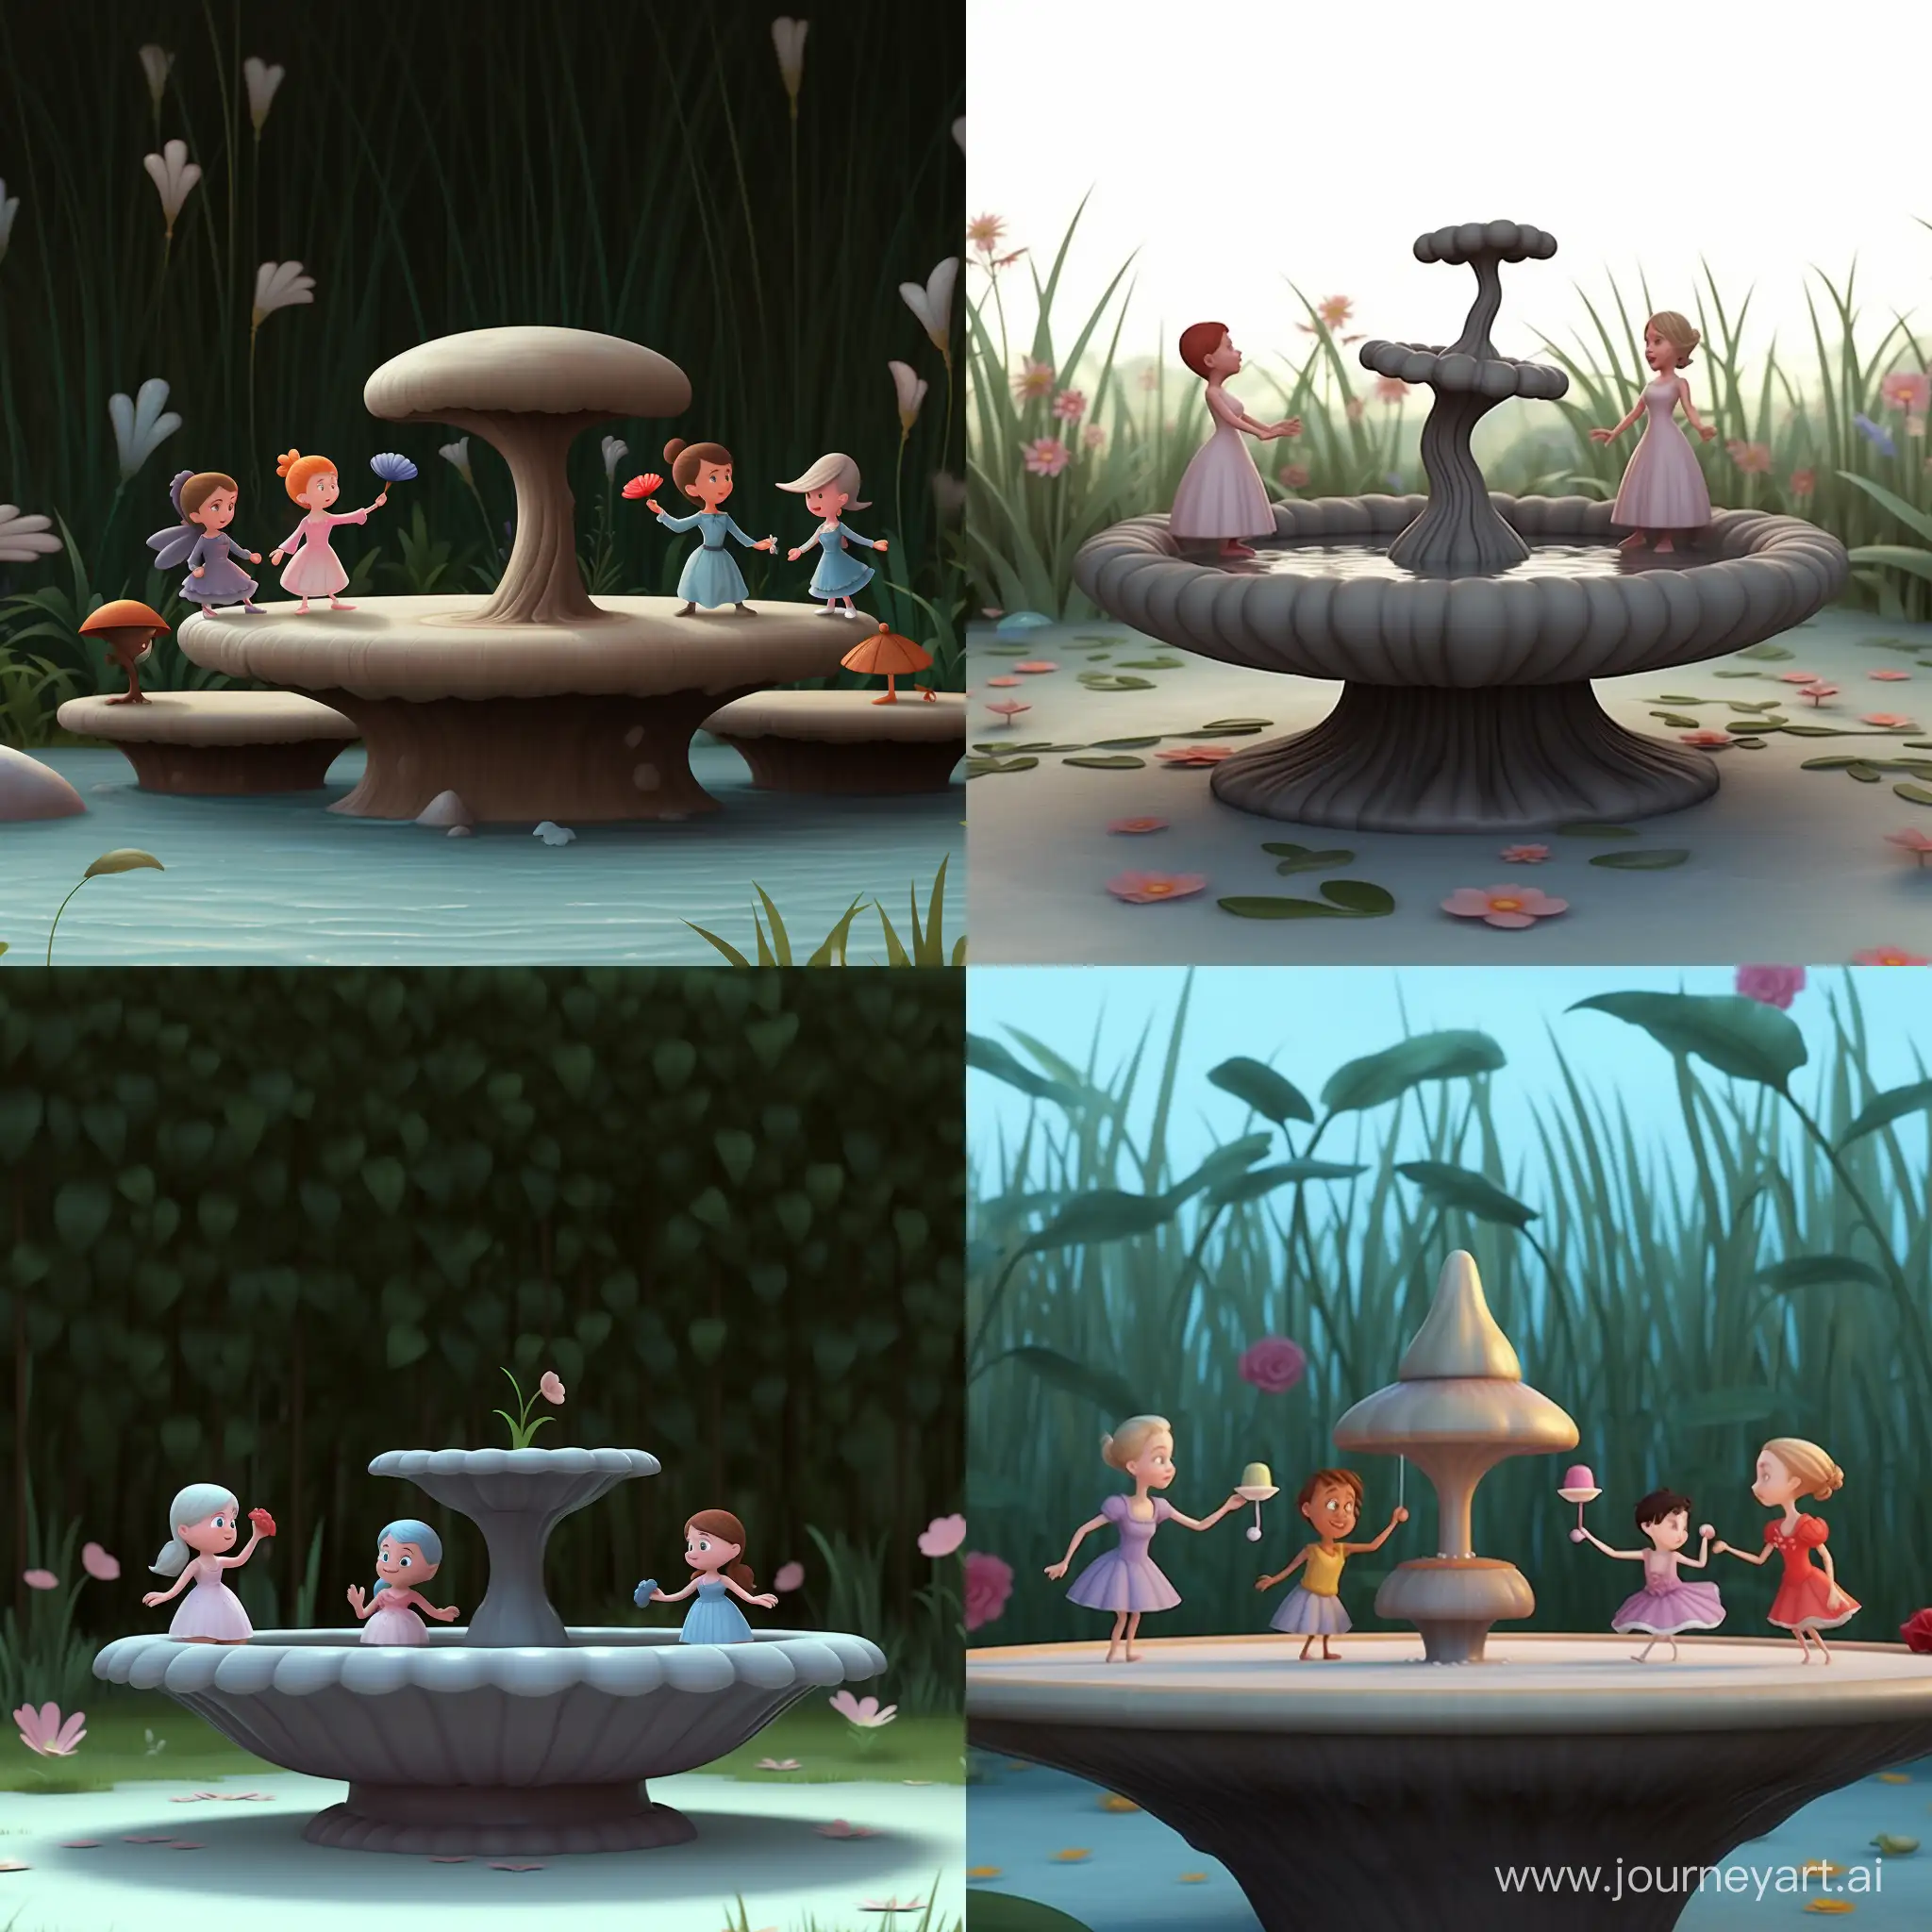 Three little fairies playing a birdbath in Pixar style